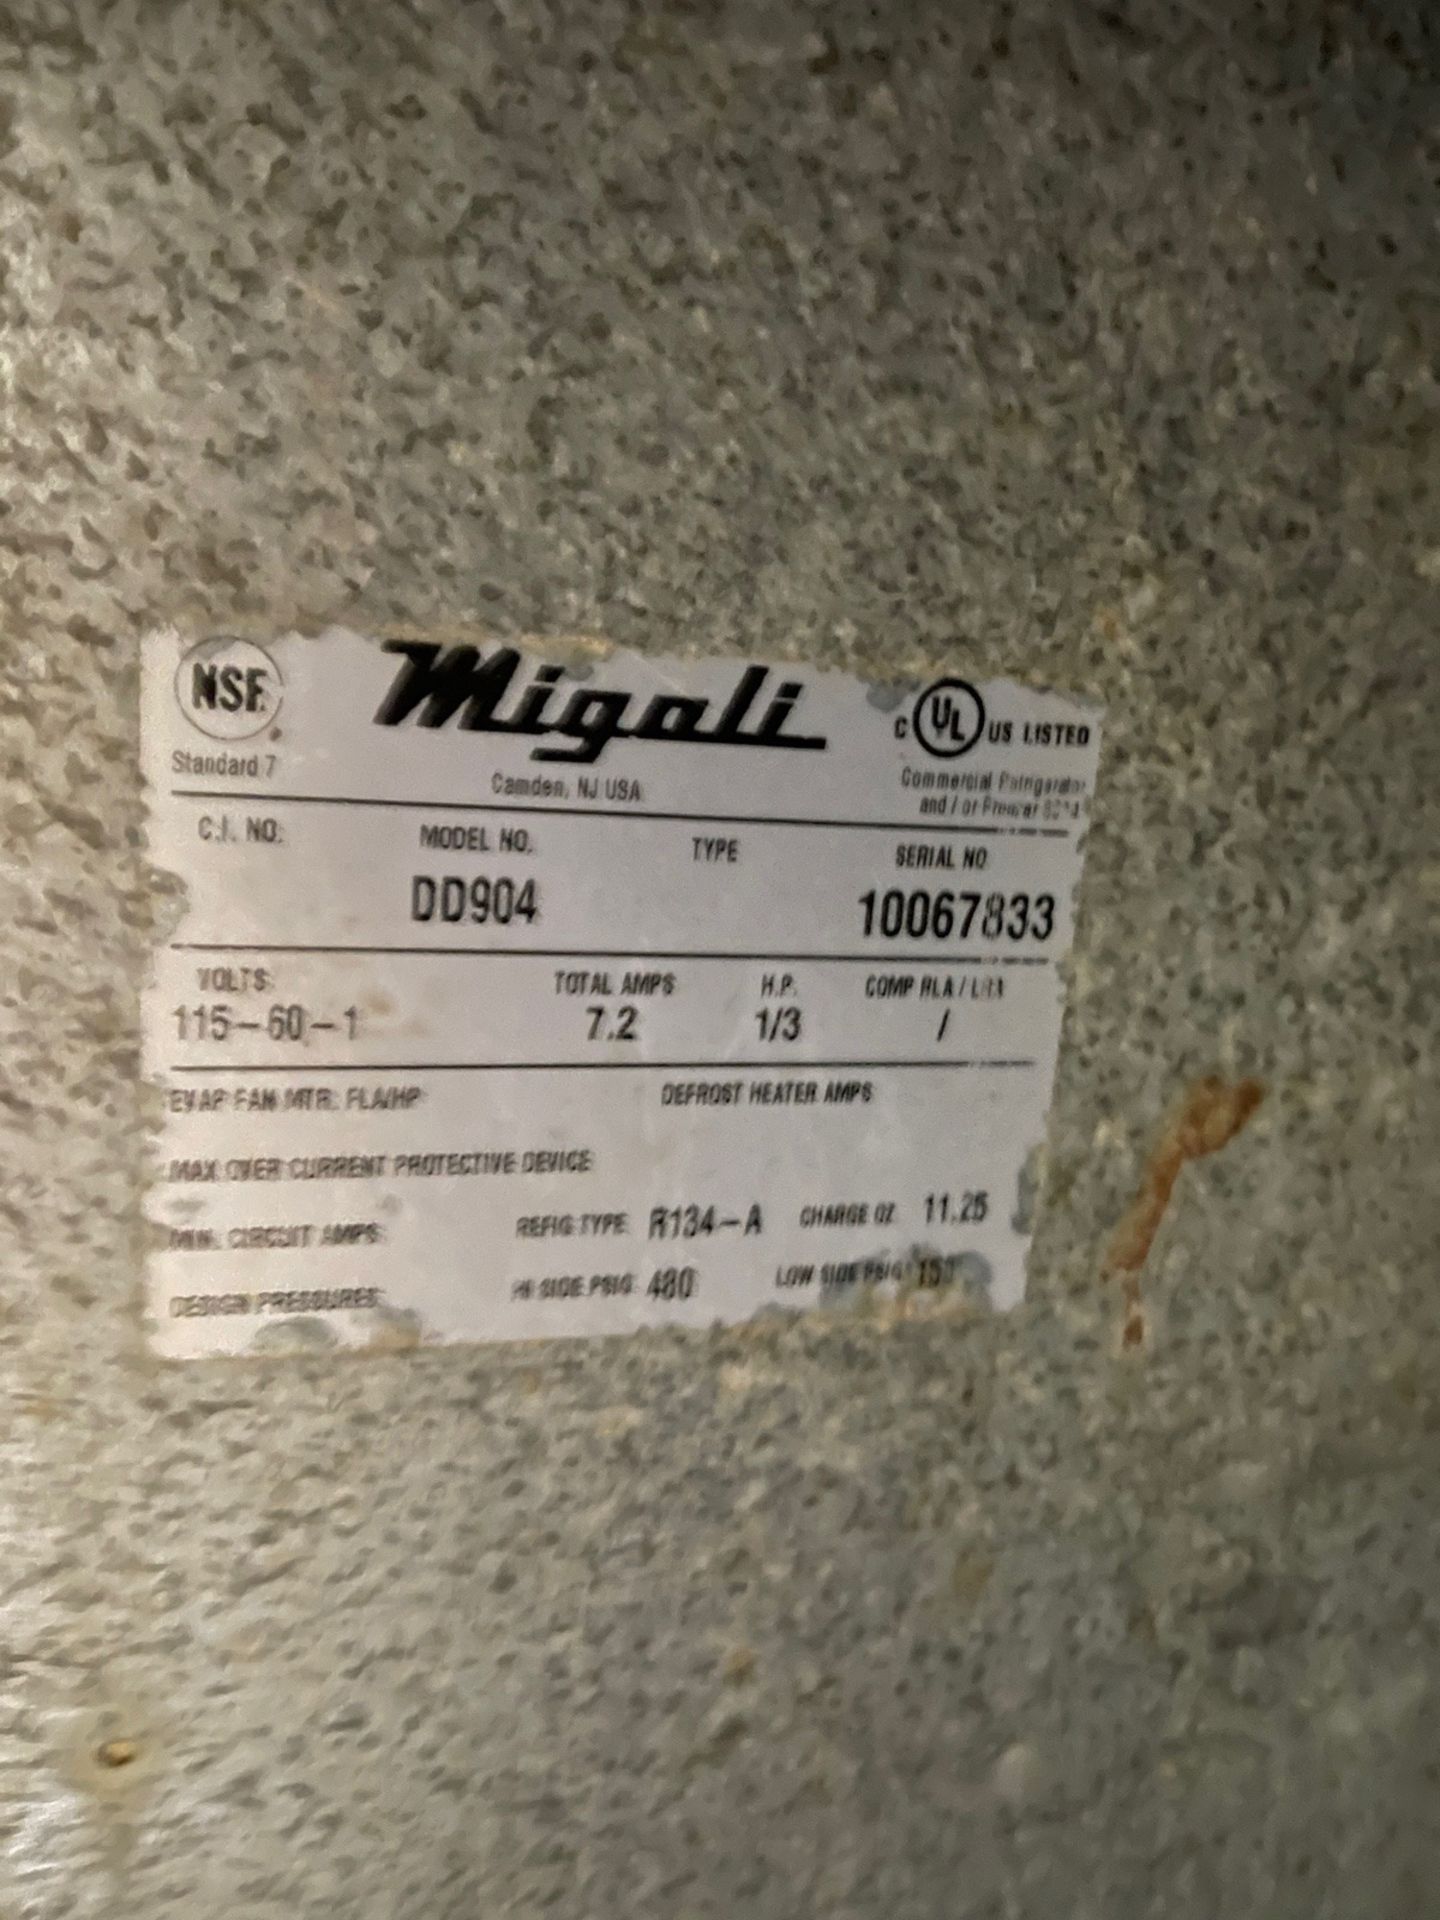 Migali 3 Door Keg Cooler with 6 Tap Handles, Model D0904, S/N 10067833, Approx. 27" | Rig Fee $250 - Image 2 of 3